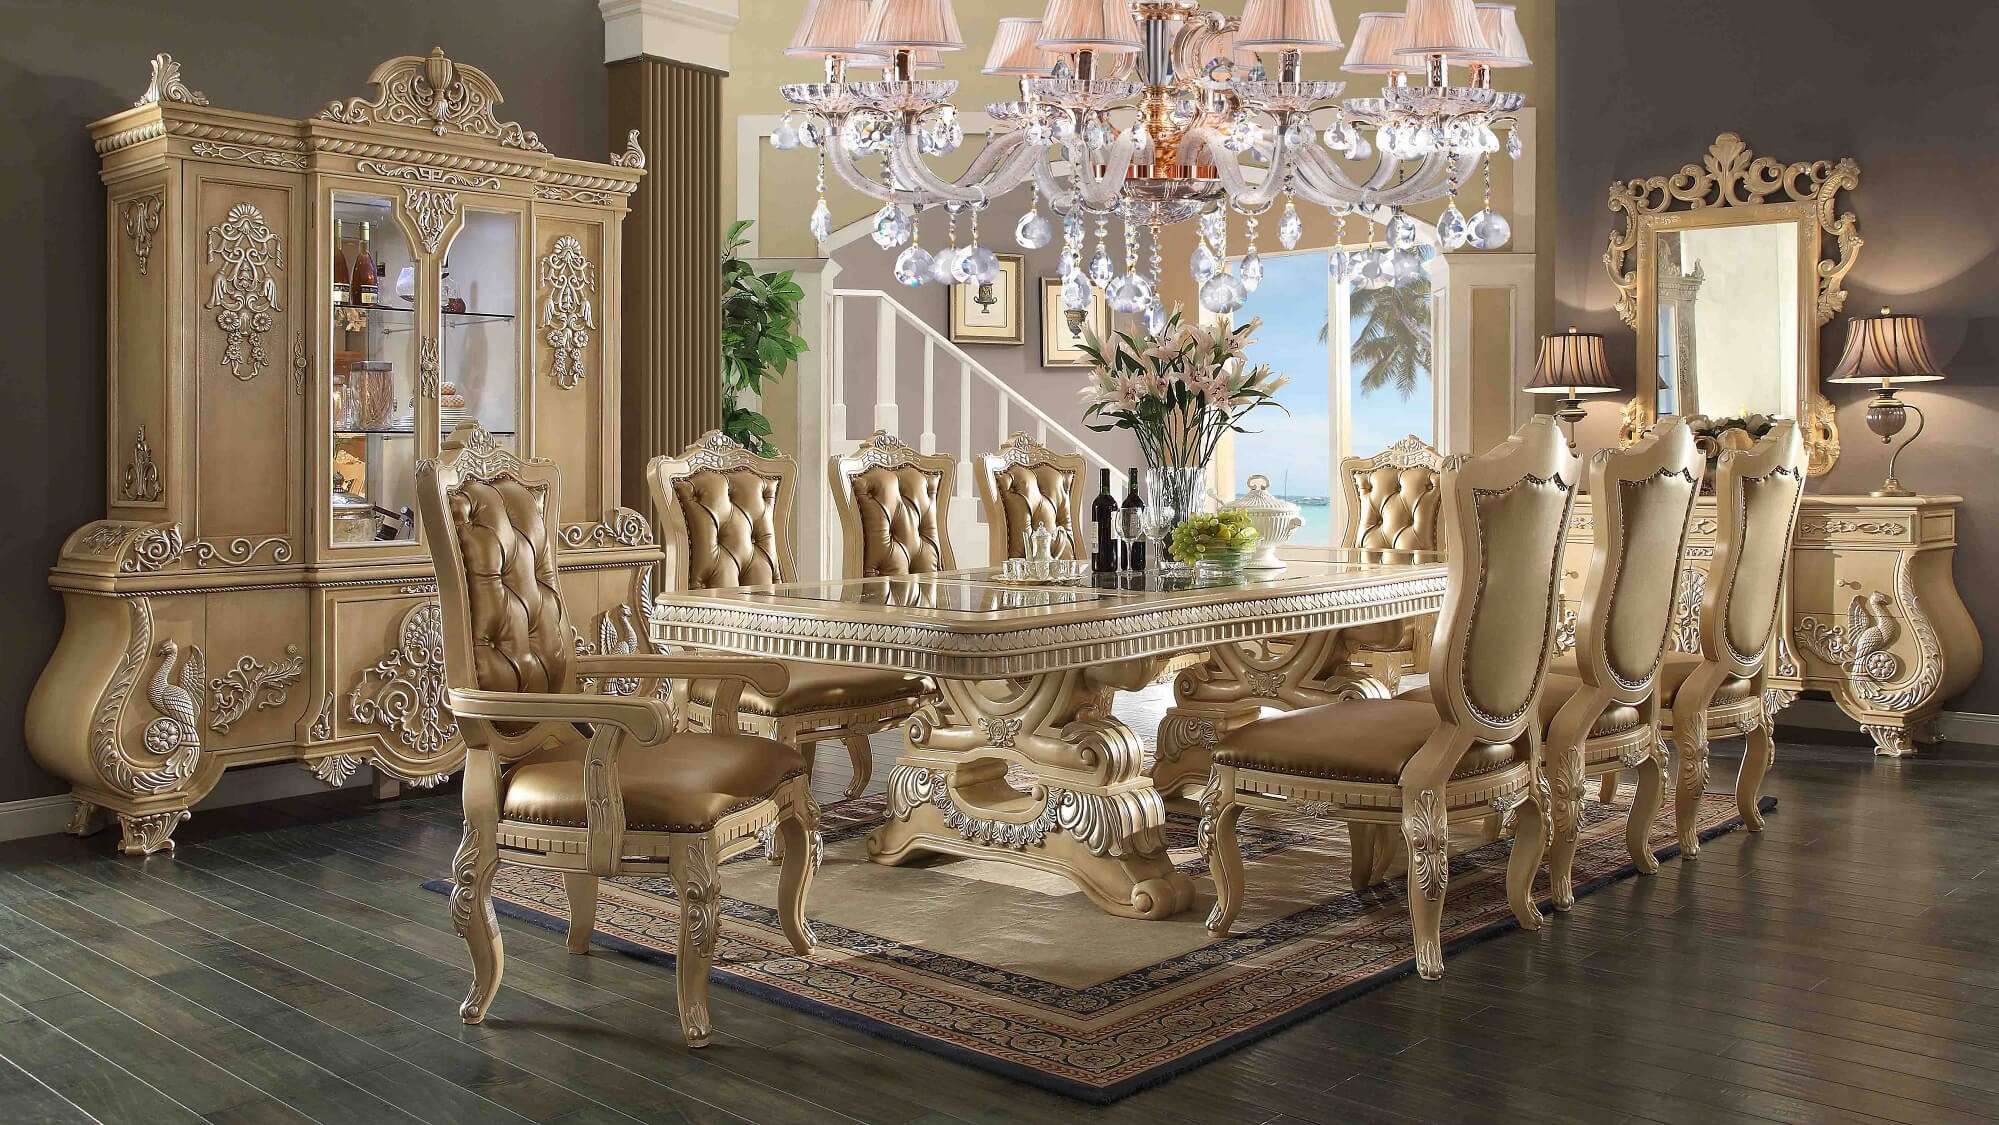 royal dining room | Orchidlagoon.com